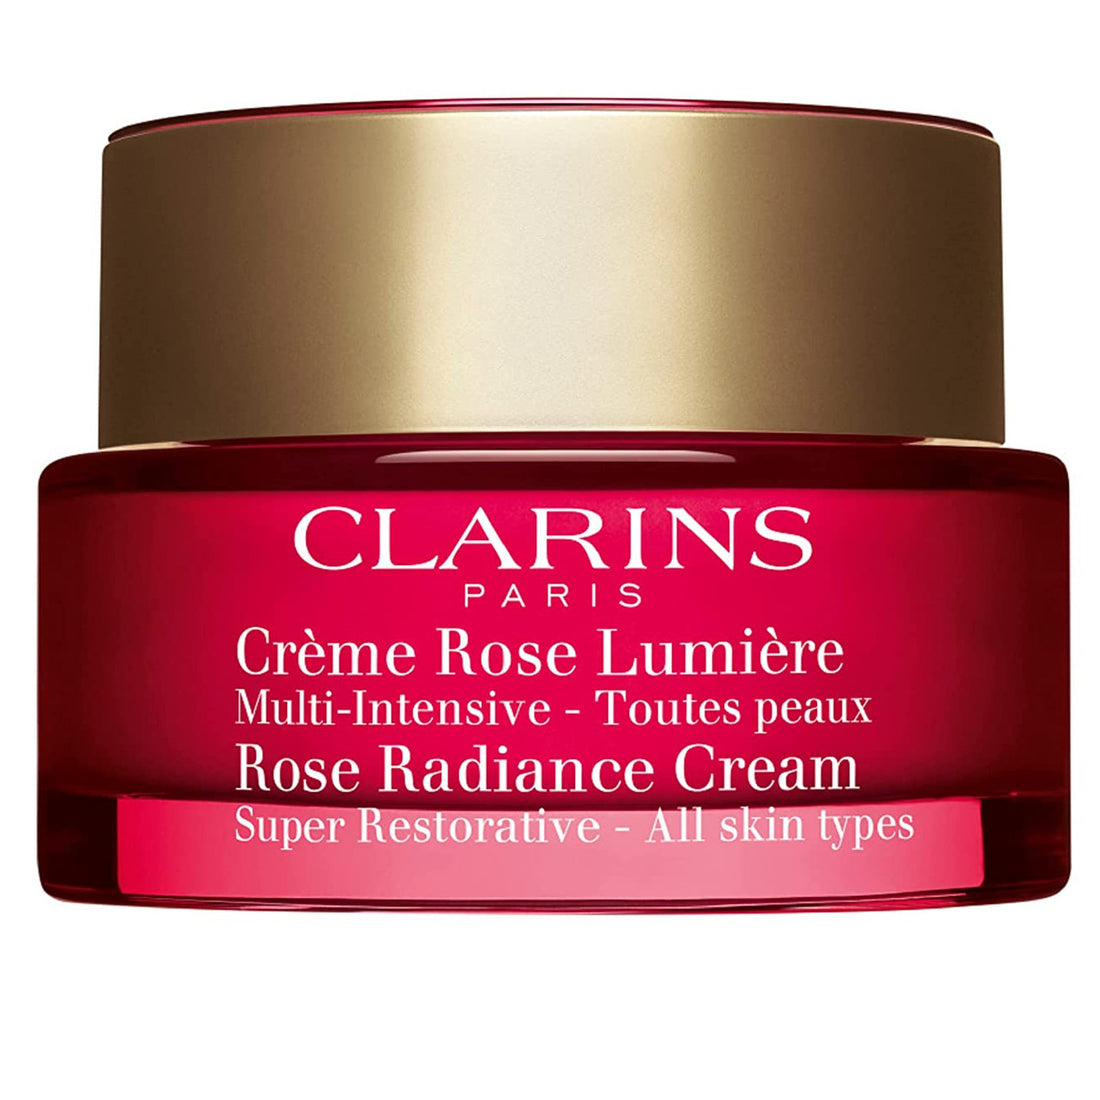 Clarins Rose Radiance Cream Super Restorative All Skin Types 50ml